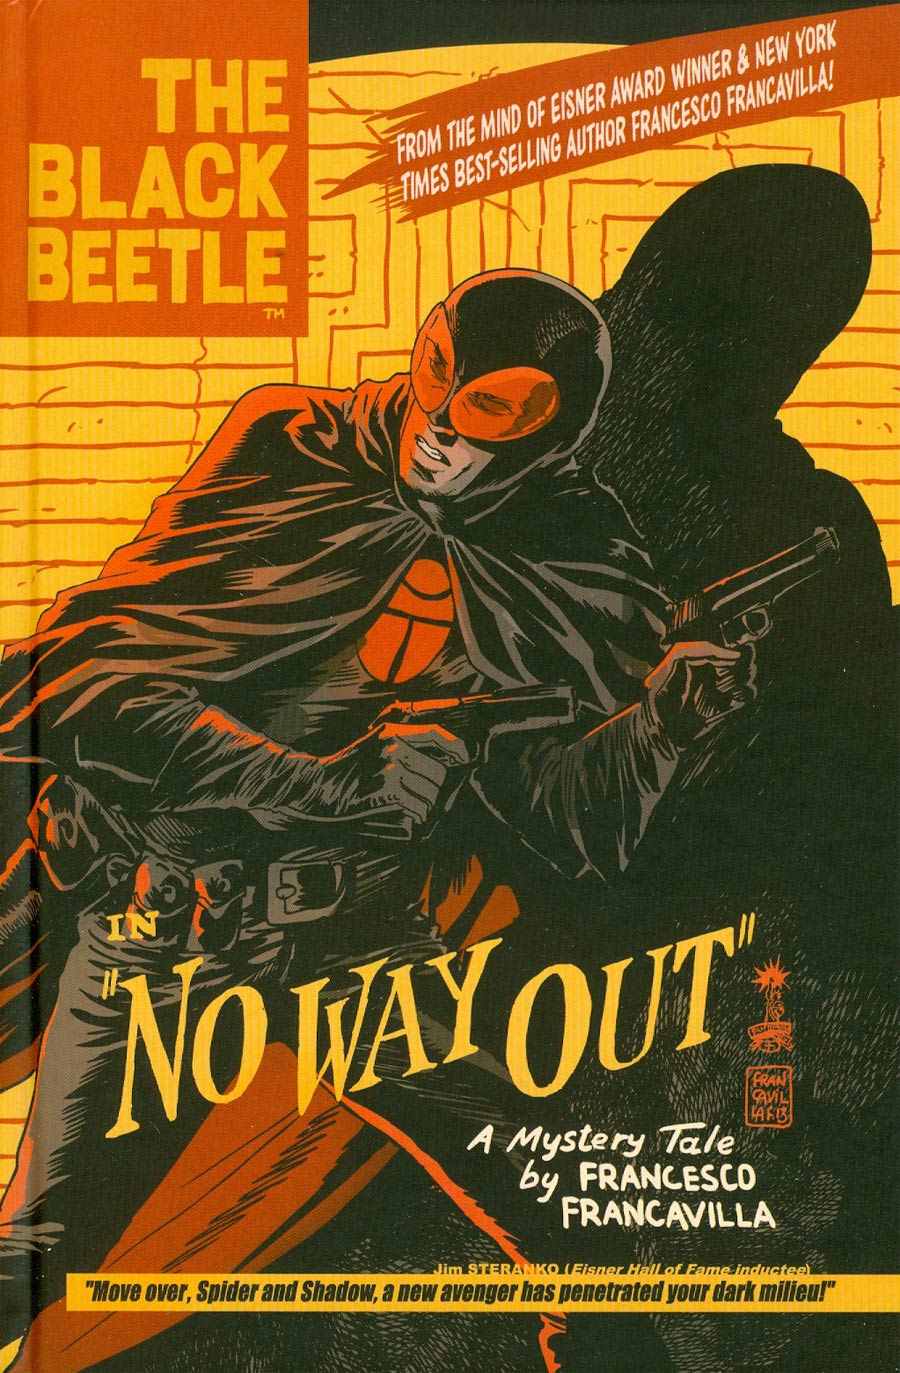 Black Beetle Vol 1 No Way Out HC